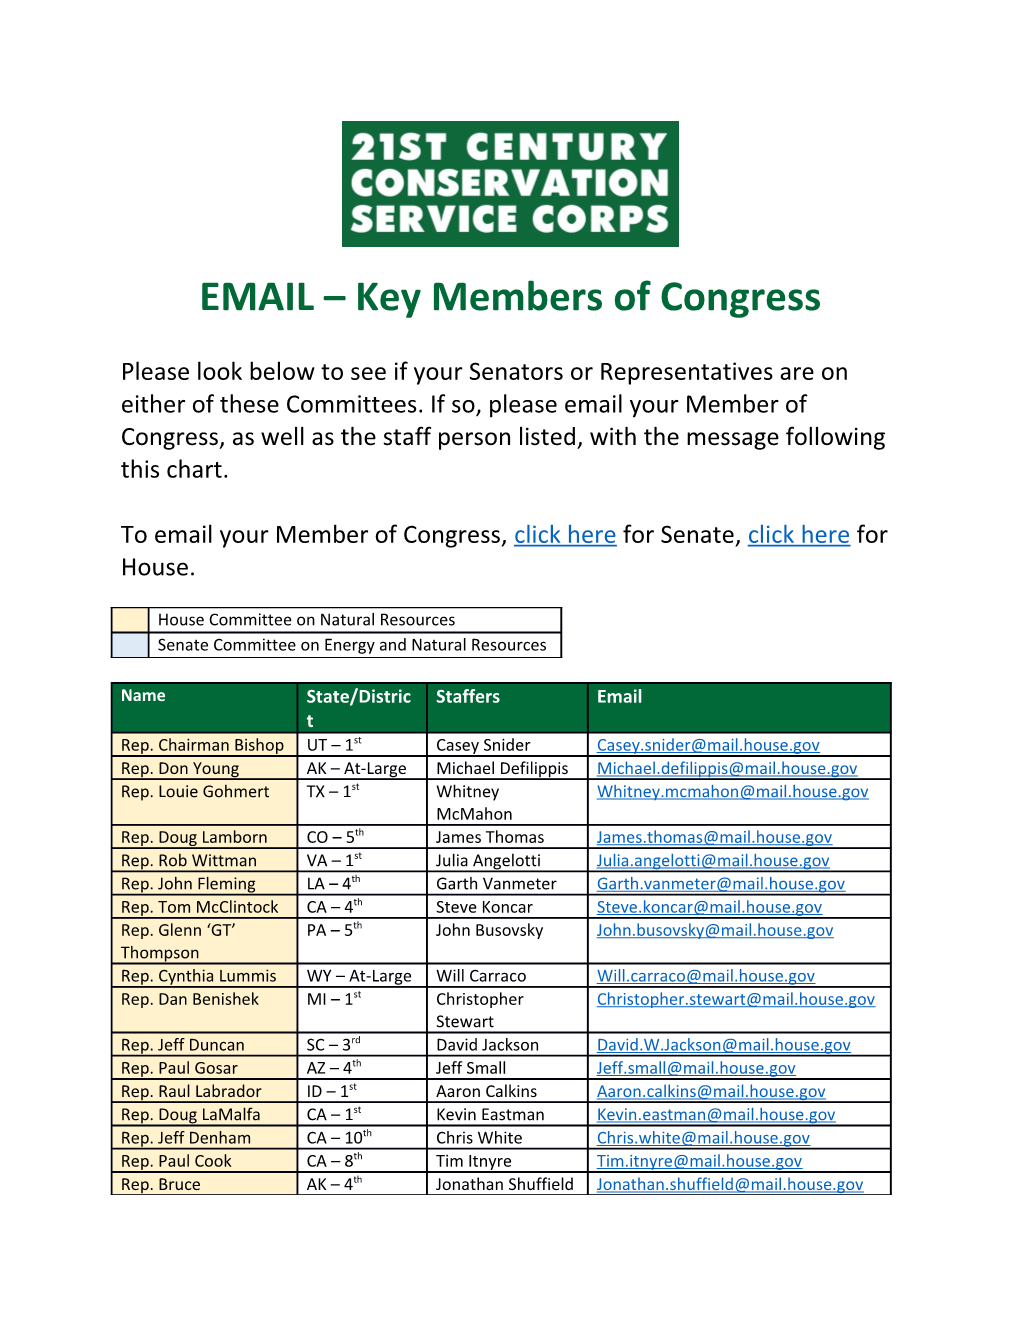 EMAIL Key Members of Congress